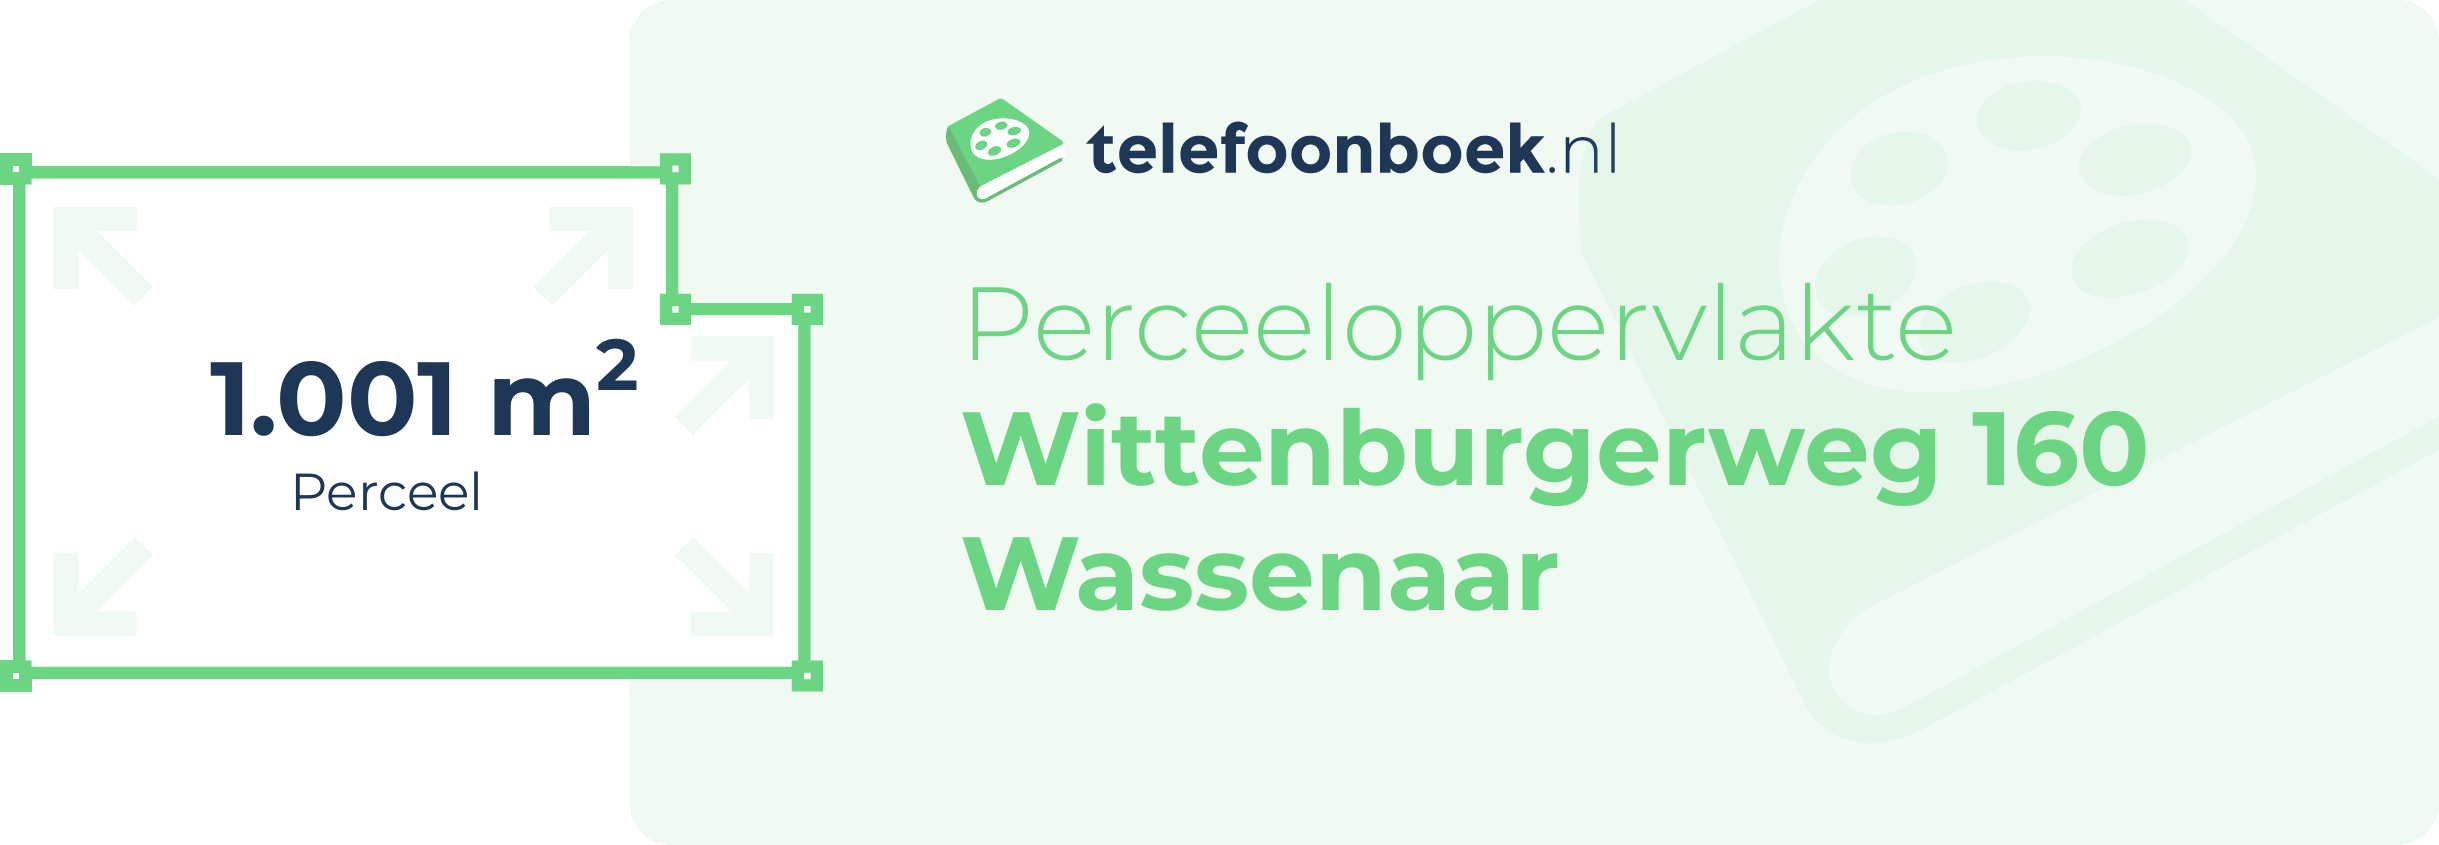 Perceeloppervlakte Wittenburgerweg 160 Wassenaar